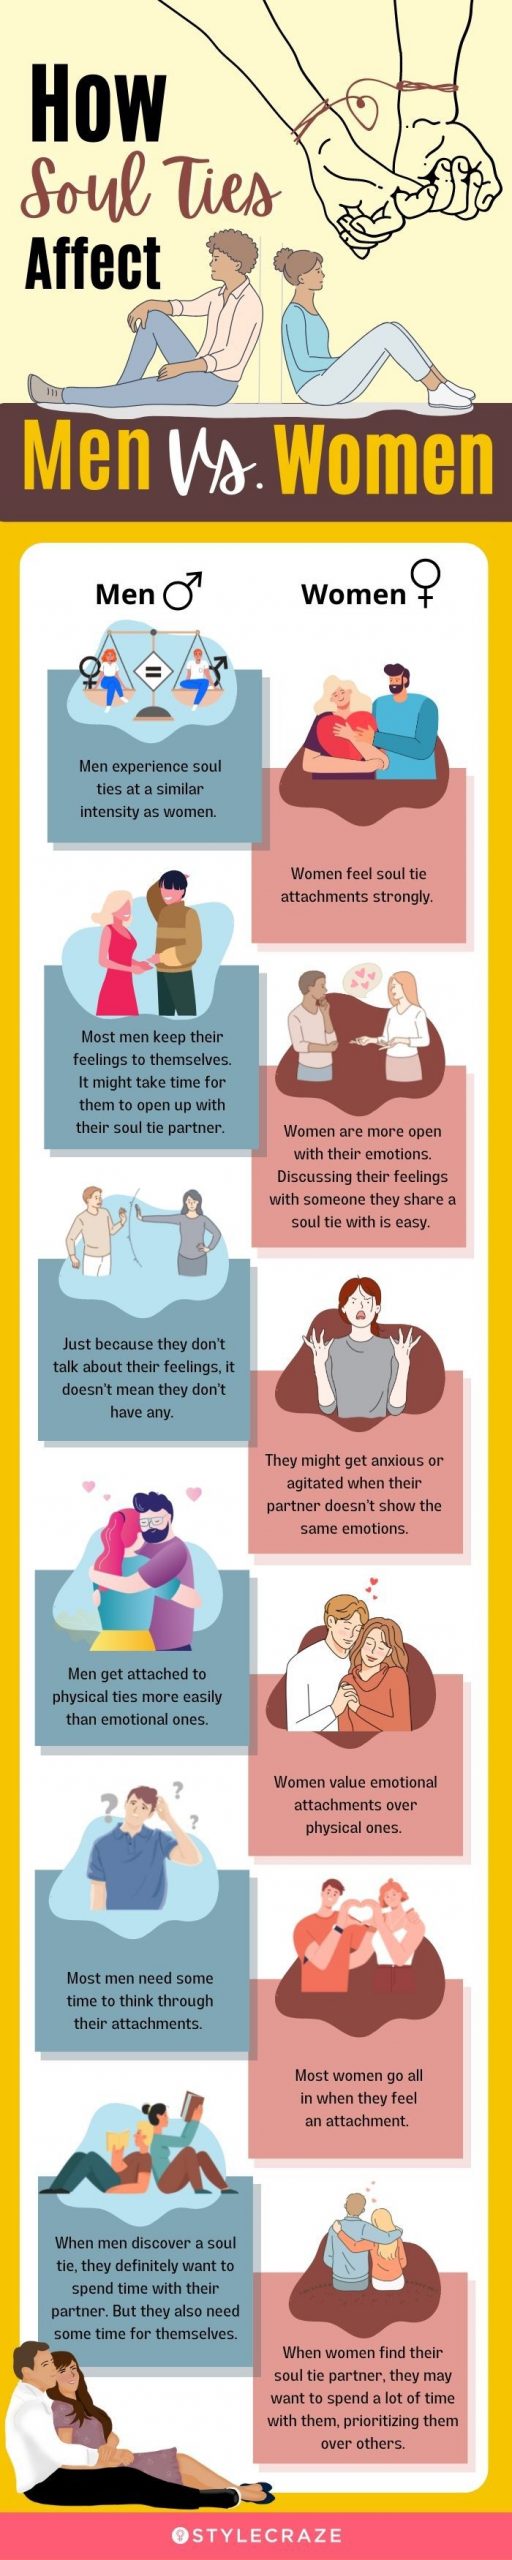 how soul ties affect men vs. women (infographic)